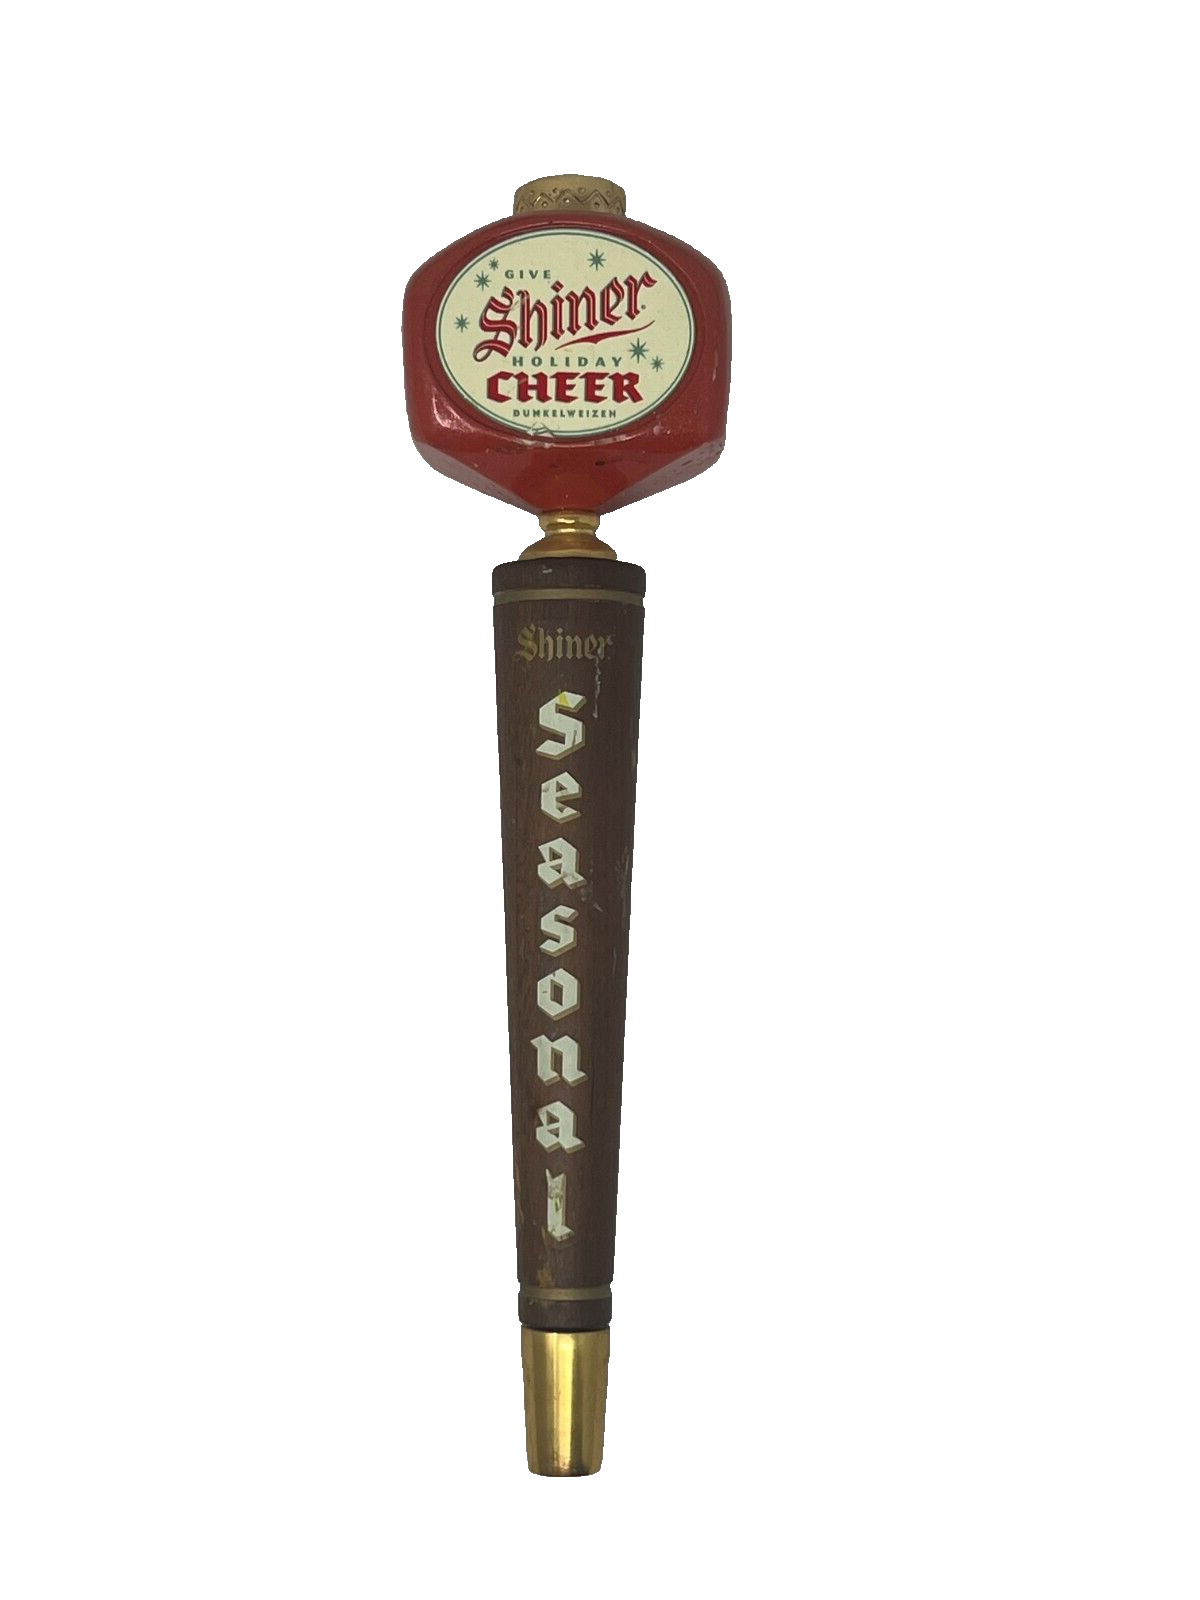 Shiner Seasonal Holiday Cheer 2 Sided Draft Beer Tap Handle Tapper Mancave Bar